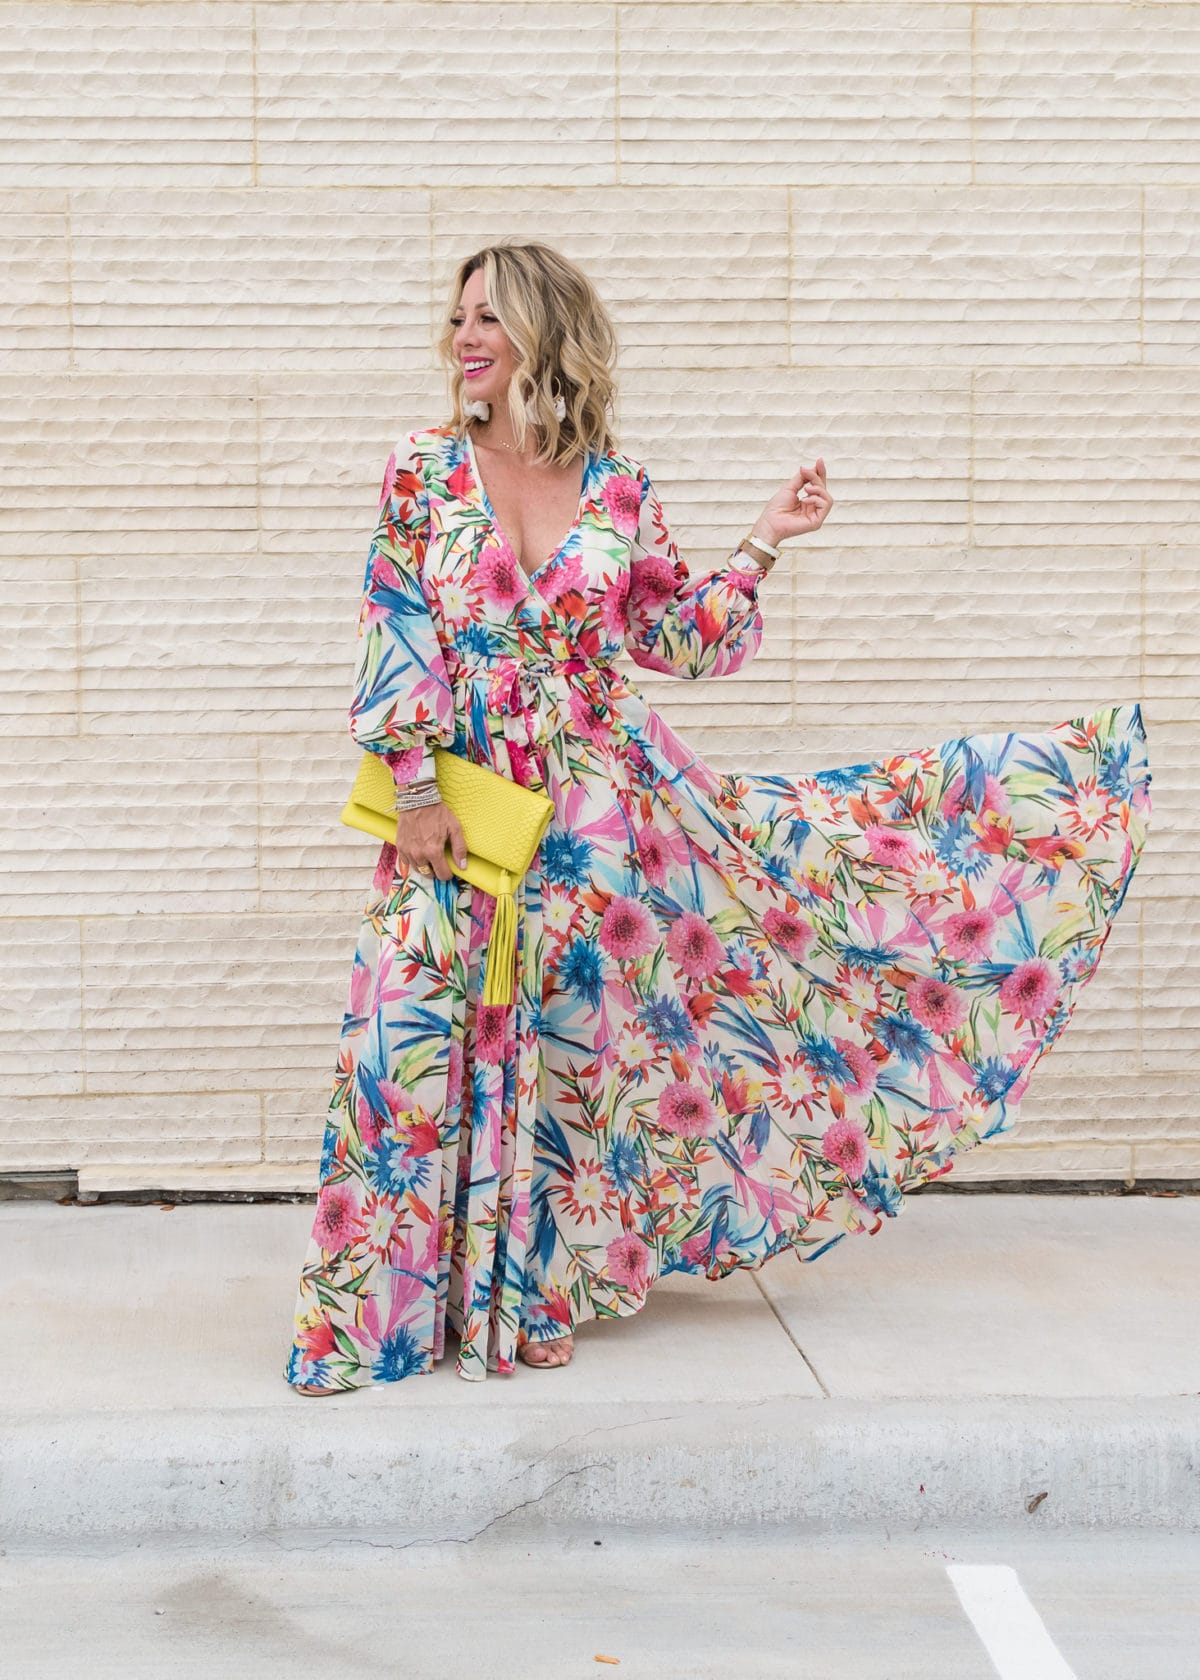 Amazon Fashion Prime Day Haul - Floral Maxi Dress